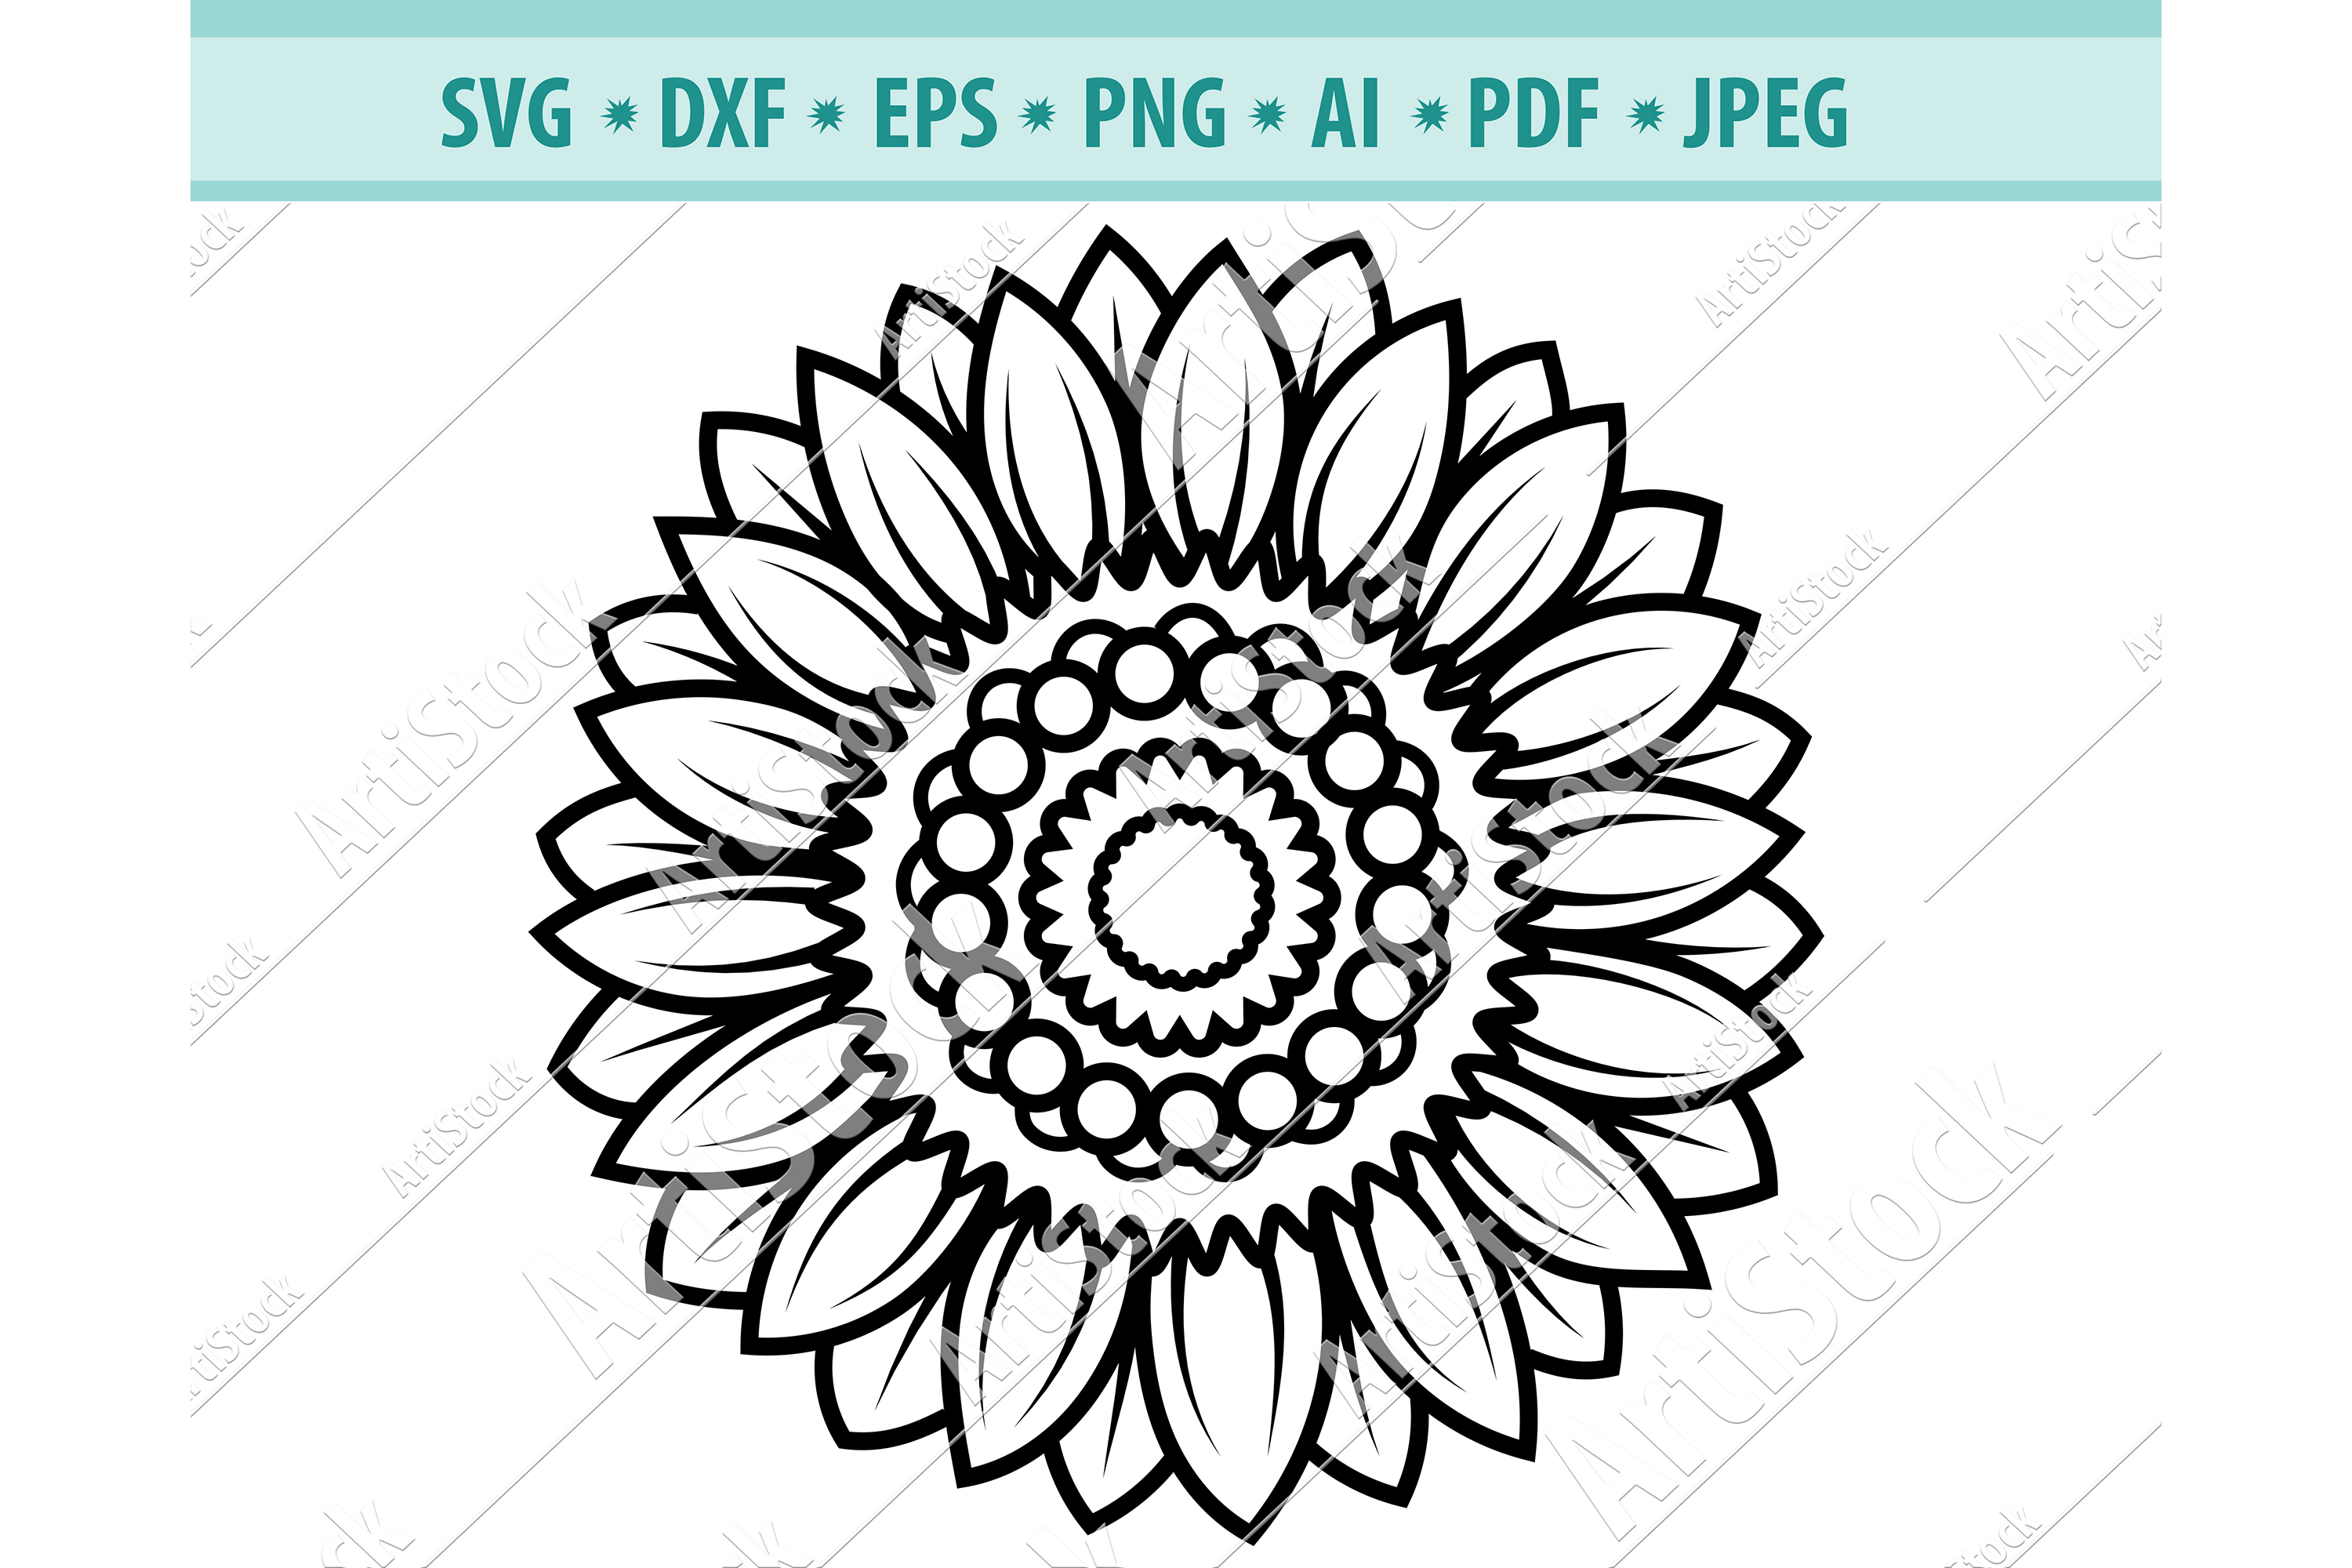 Sunflower svg, Sunflower clipart, Sun frame Dxf, Png, Eps example image 1.